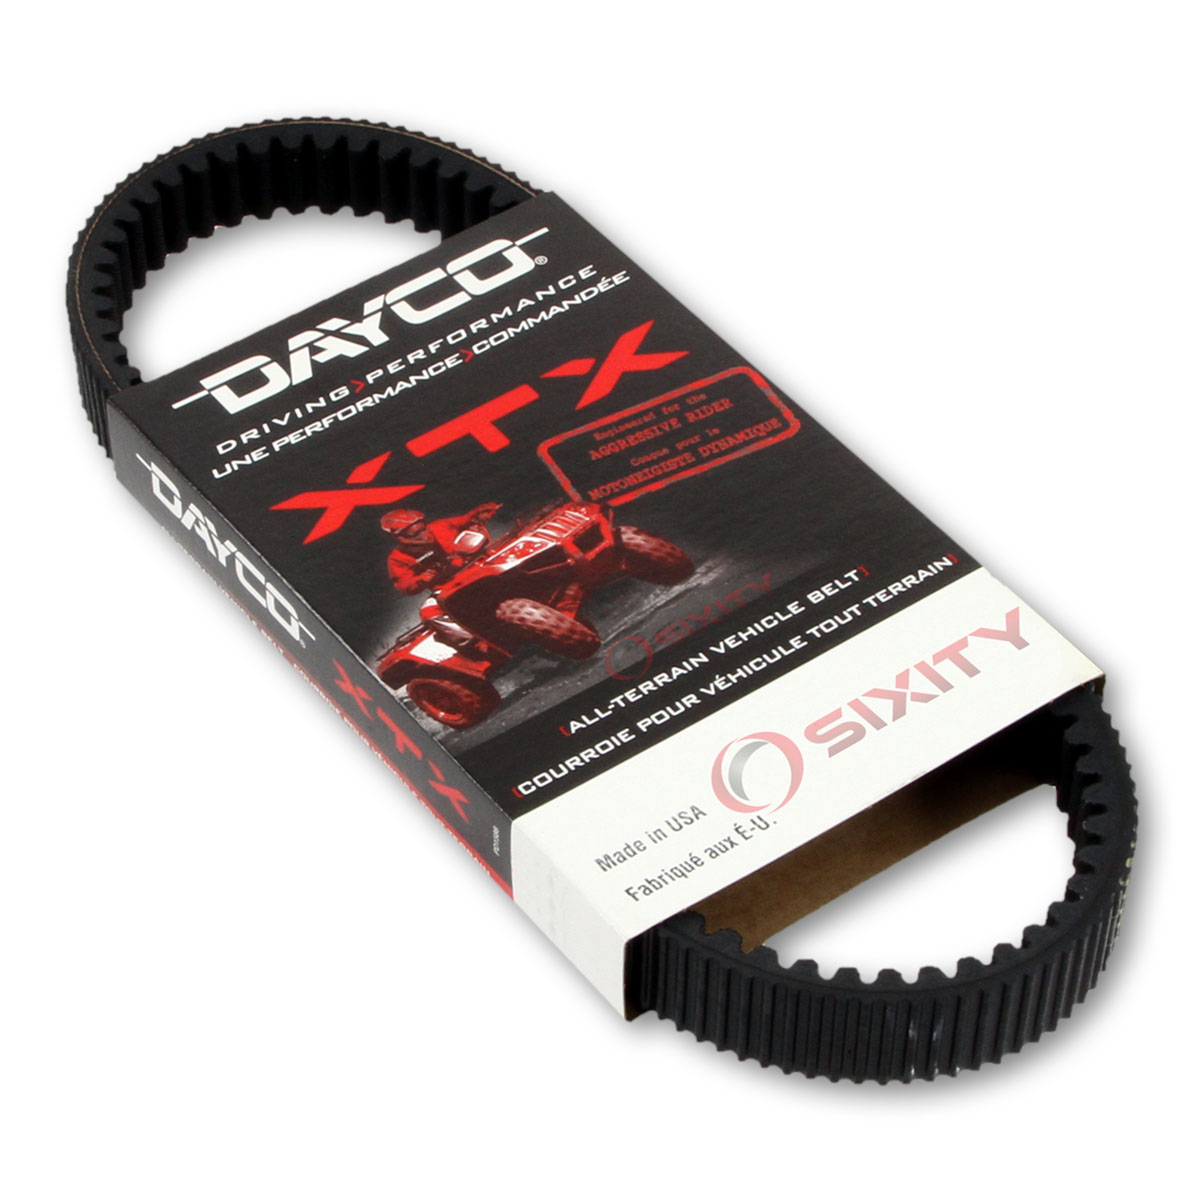 Dayco XTX Drive Belt for 2014-2015 Arctic Cat 400 - Extreme Torque CVT